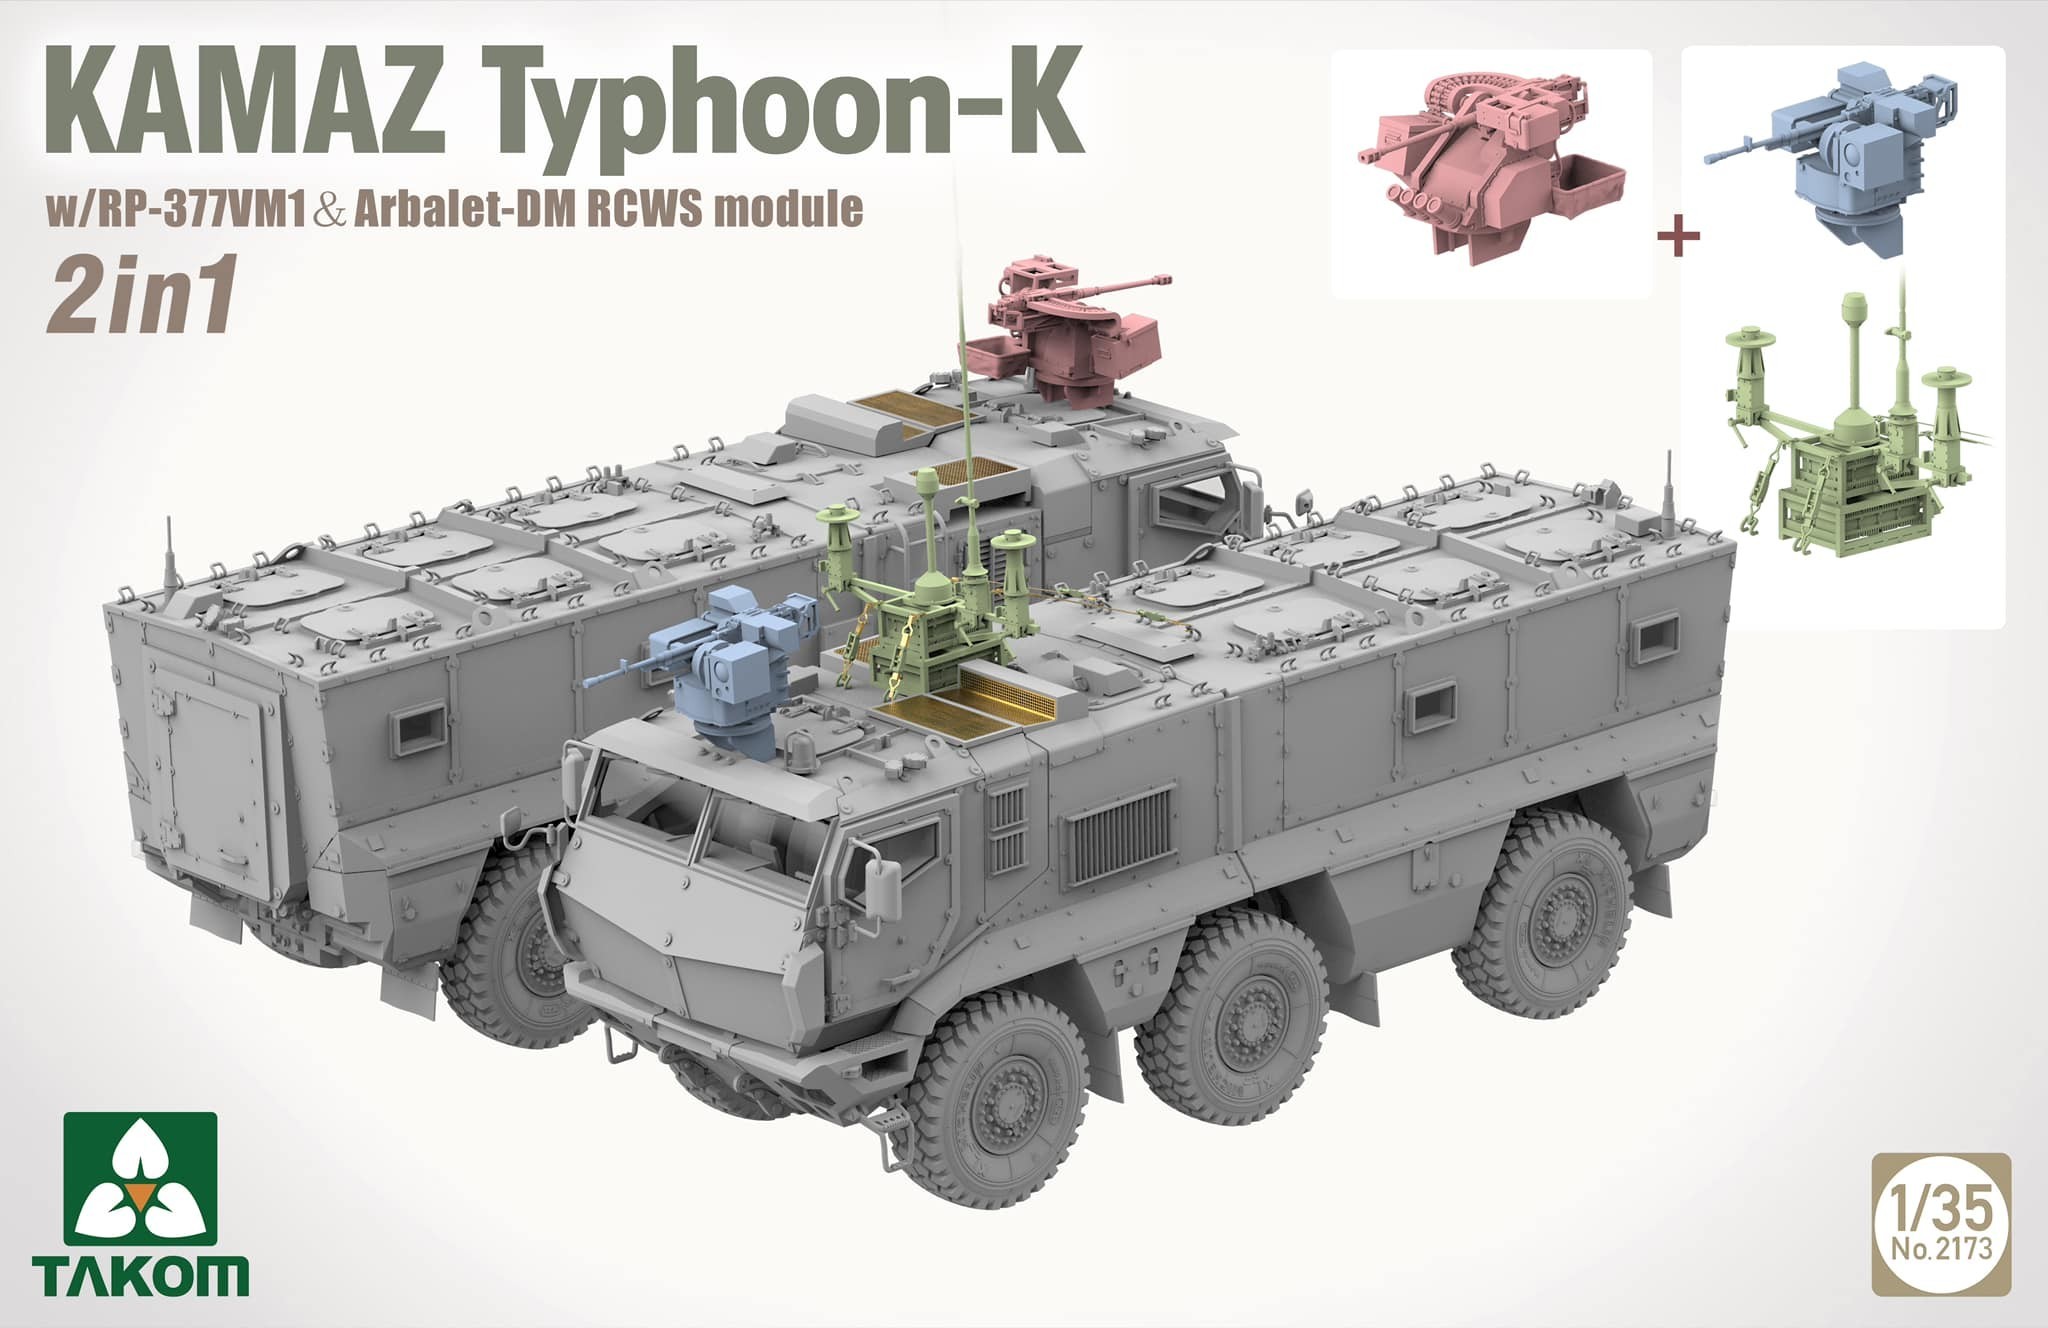 2173 - KAMAZ Typhoon-K w RP-377VM1 & Arbalet-DM RCWS module